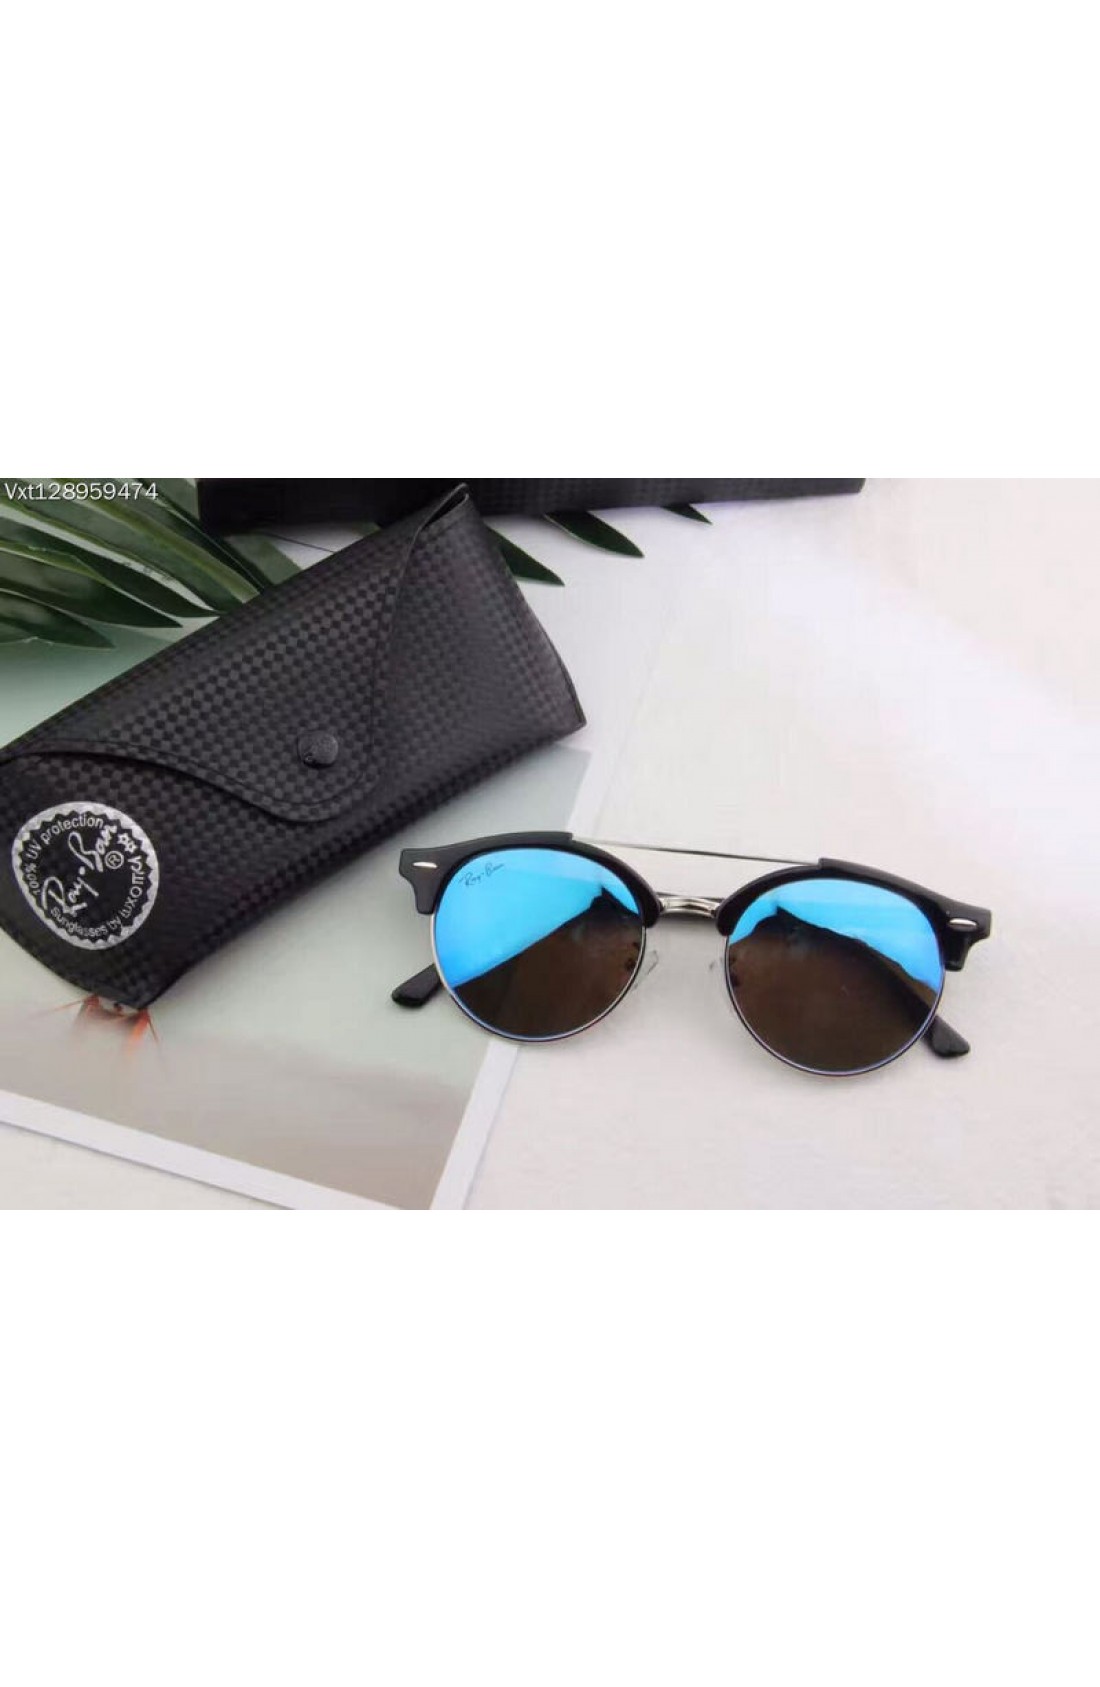 Discount Ray Ban Js044 Polarized Sunglasses Blue Lenses Black Frame